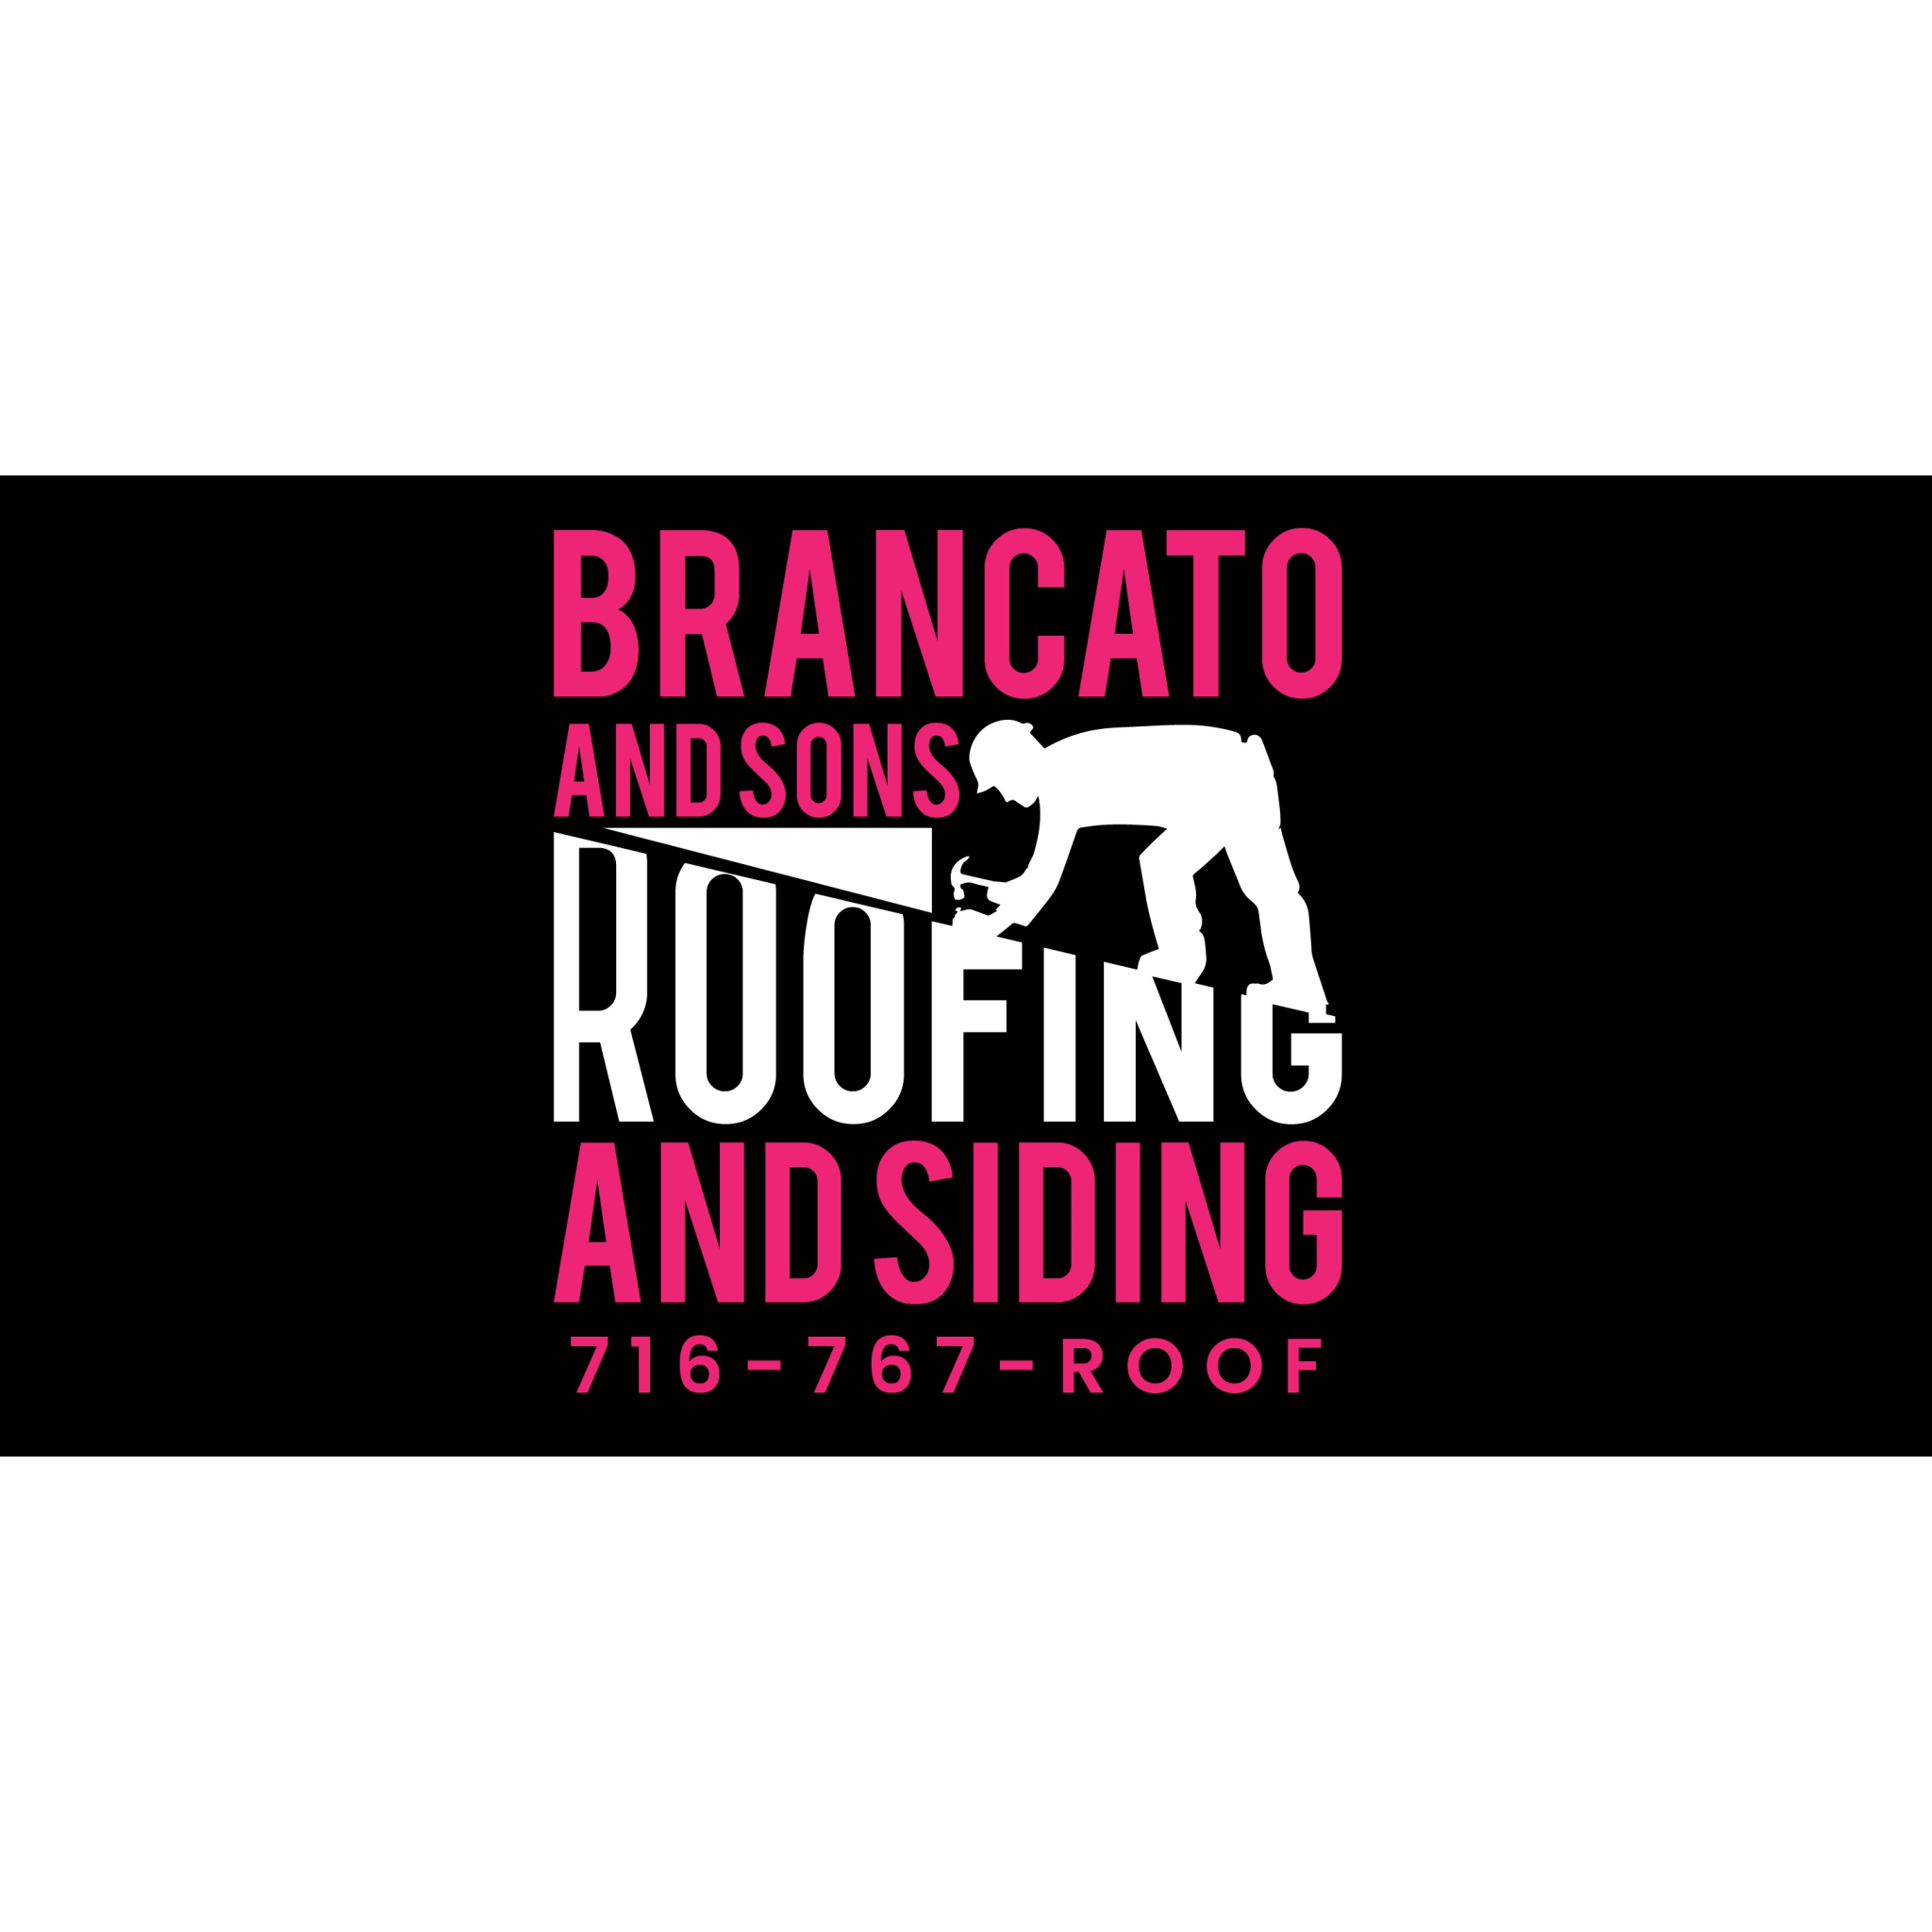 Brancato And Sons Roofing And Siding - Buffalo, NY - (716)767-7663 | ShowMeLocal.com